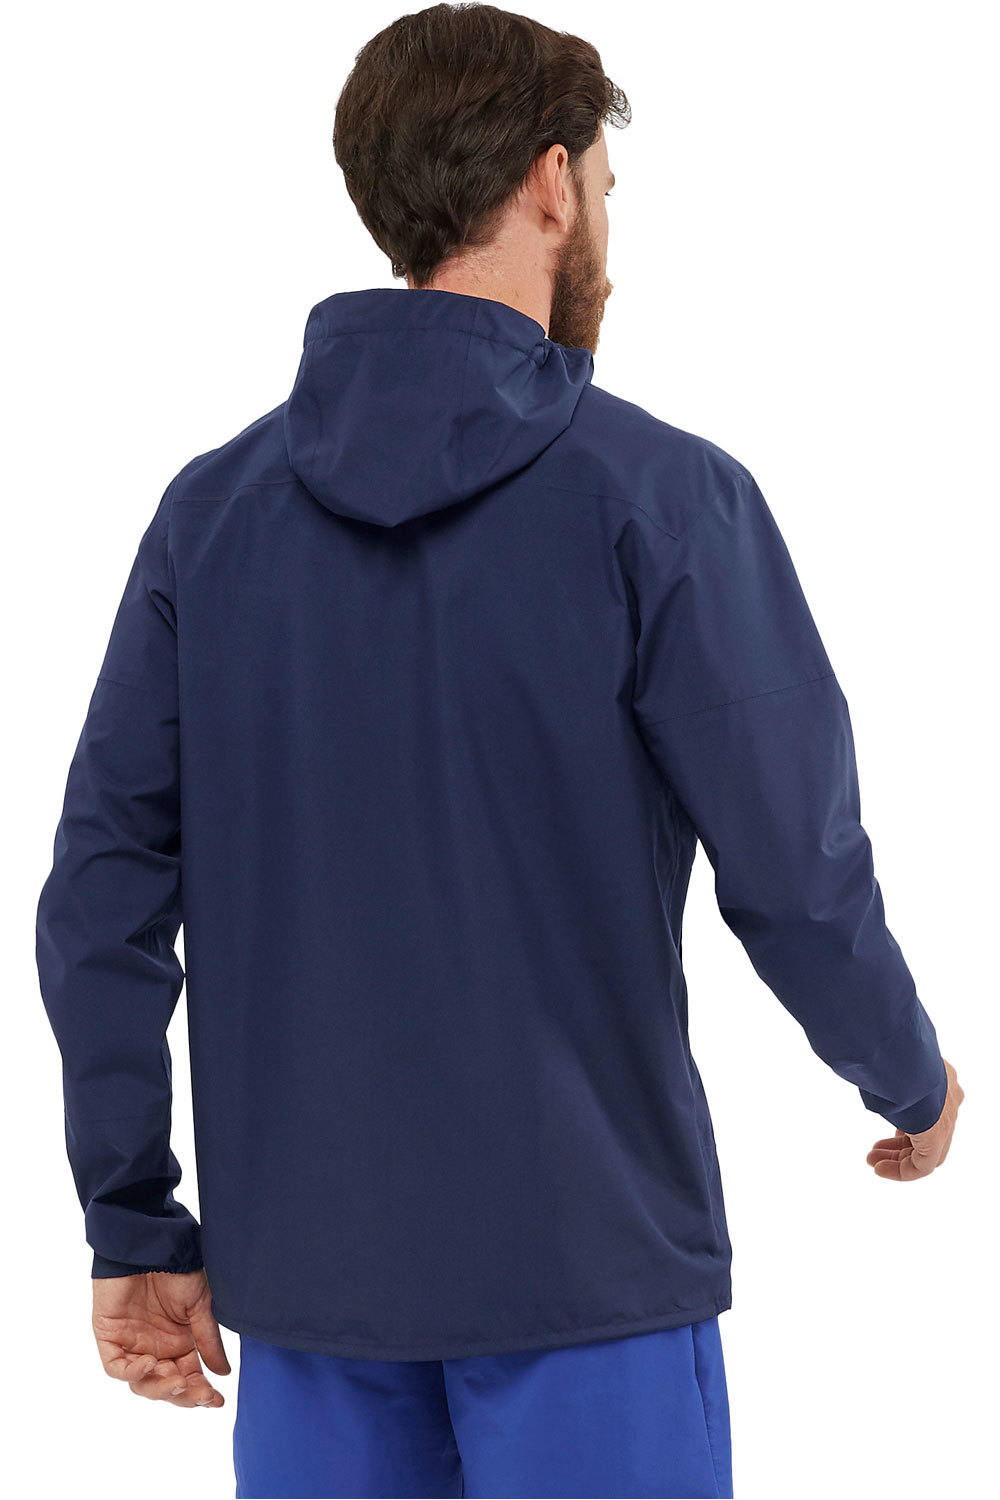 Salomon chaqueta impermeable hombre XA 2.5L WATERPROOF JACKET-NIGHT SKY-- vista trasera